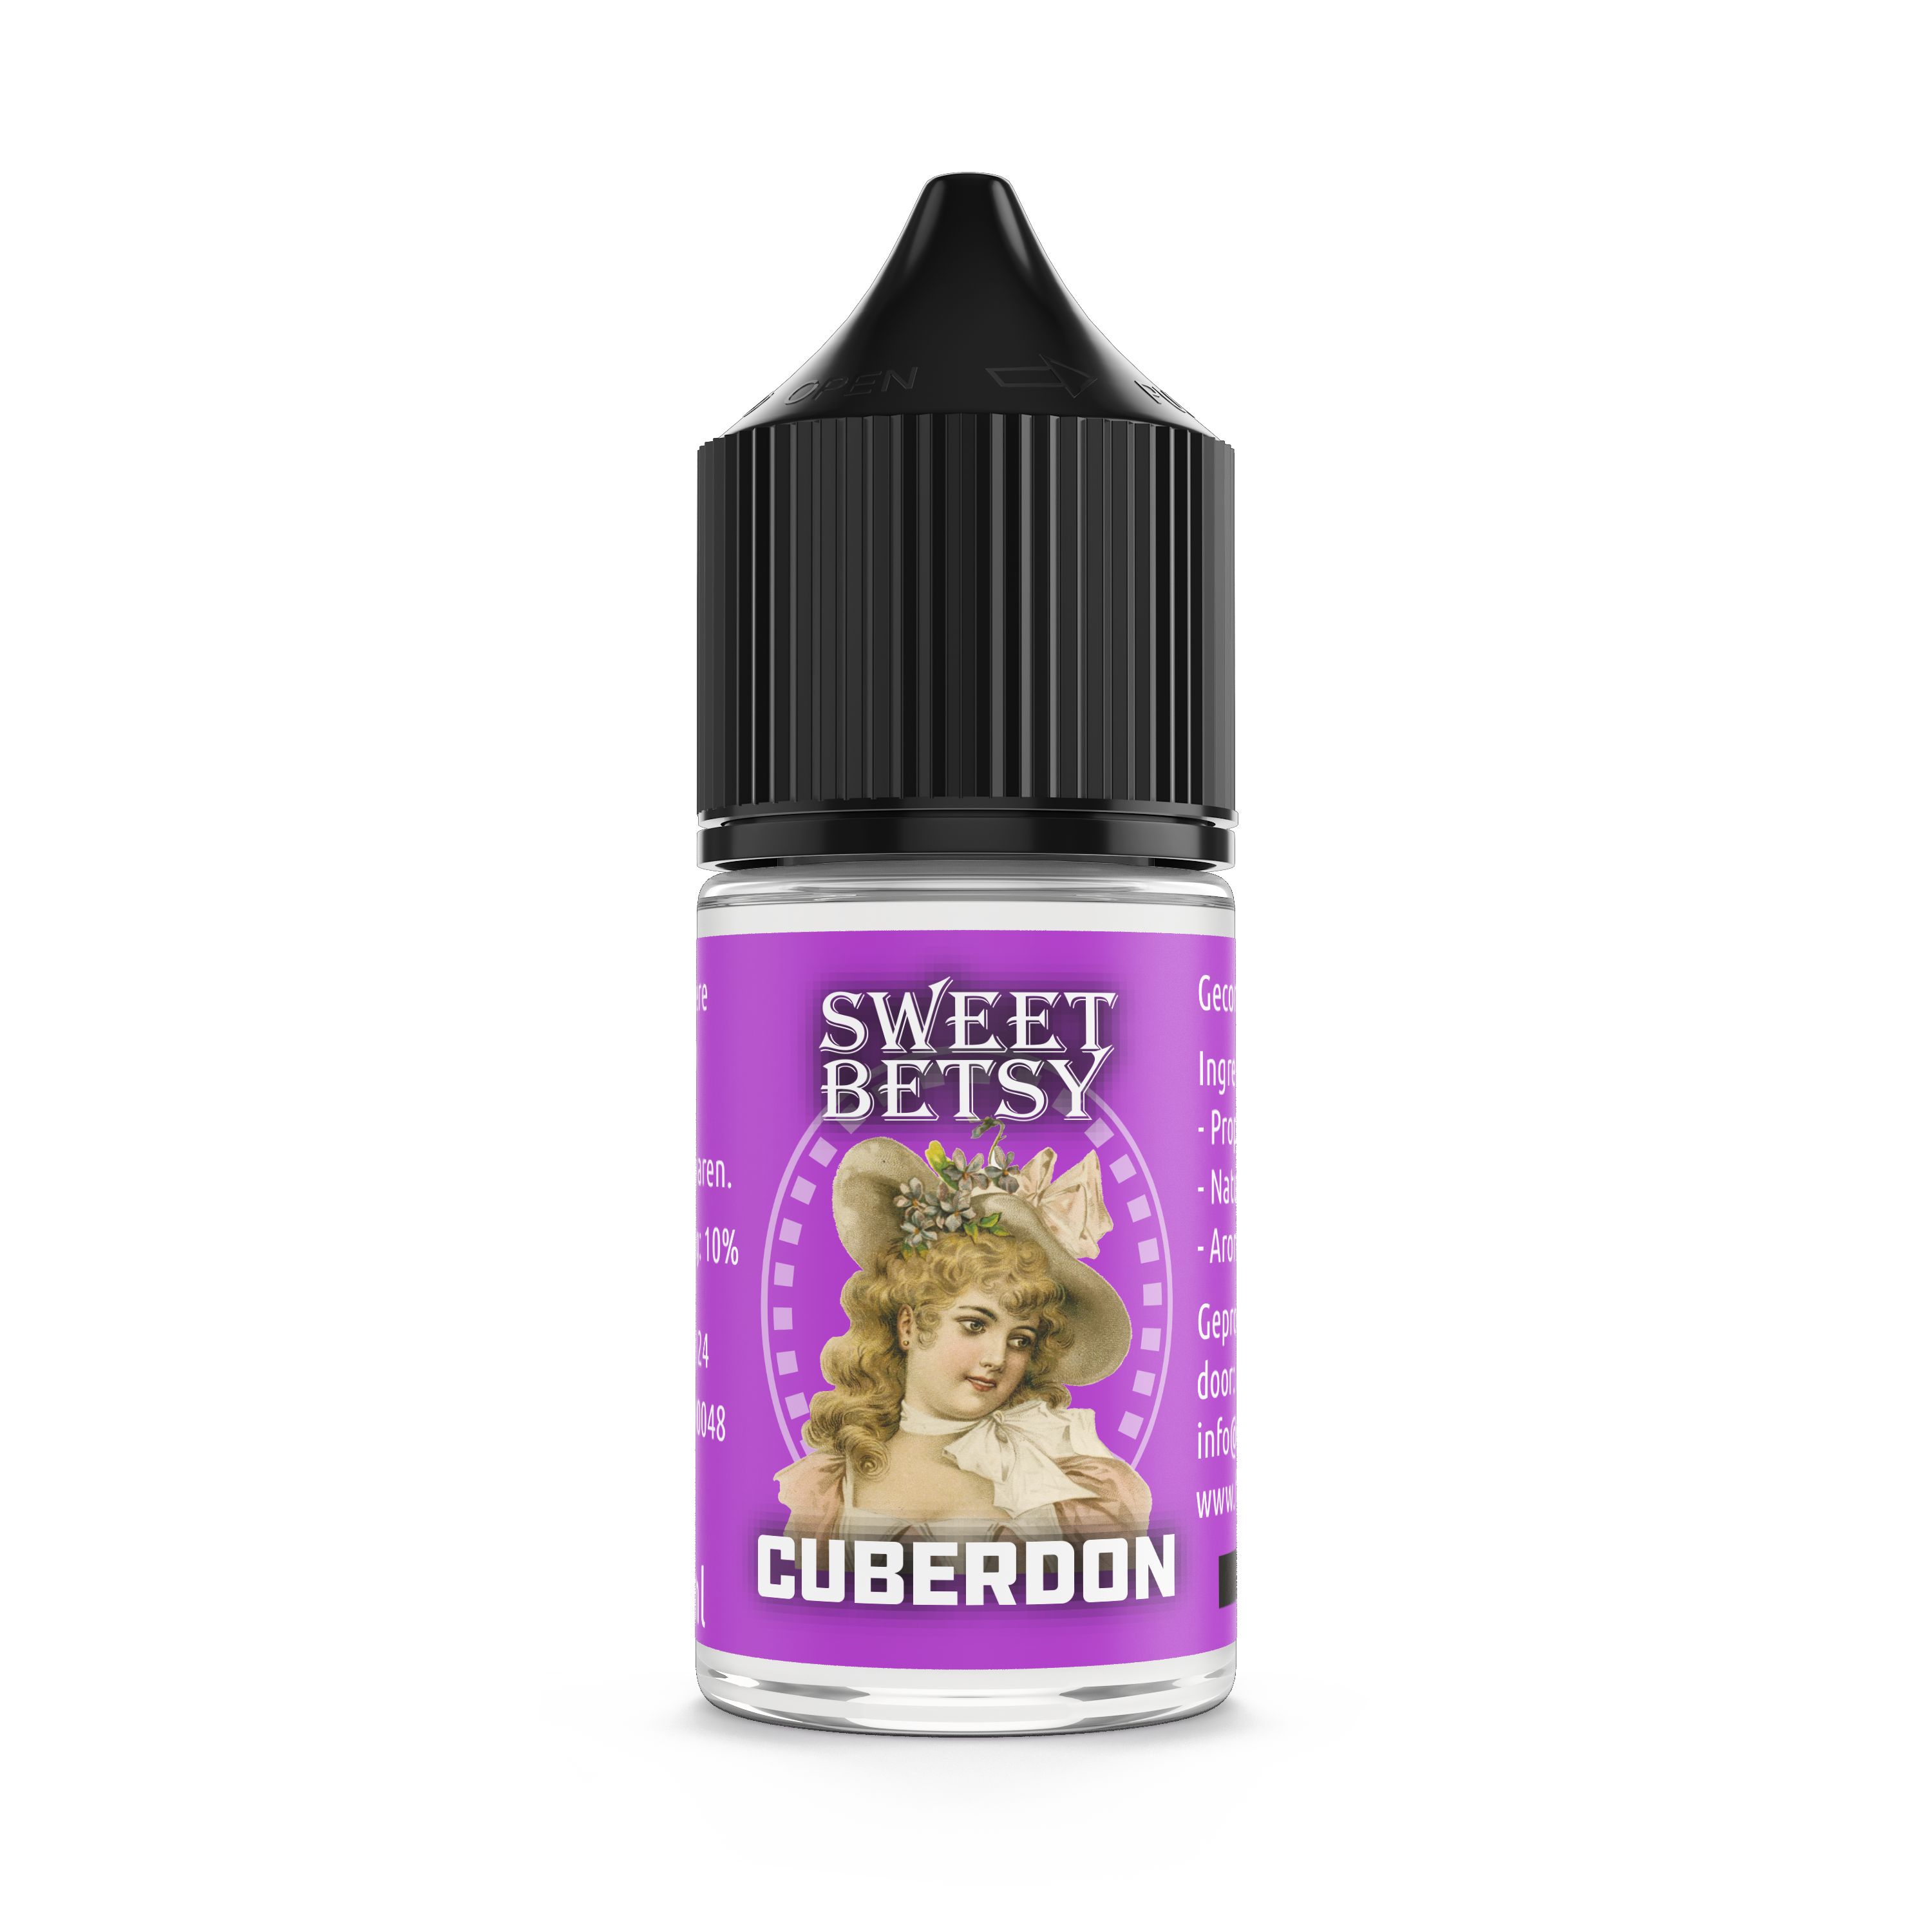 Sweet Betsy Cuberdon aroma - Flavormonks